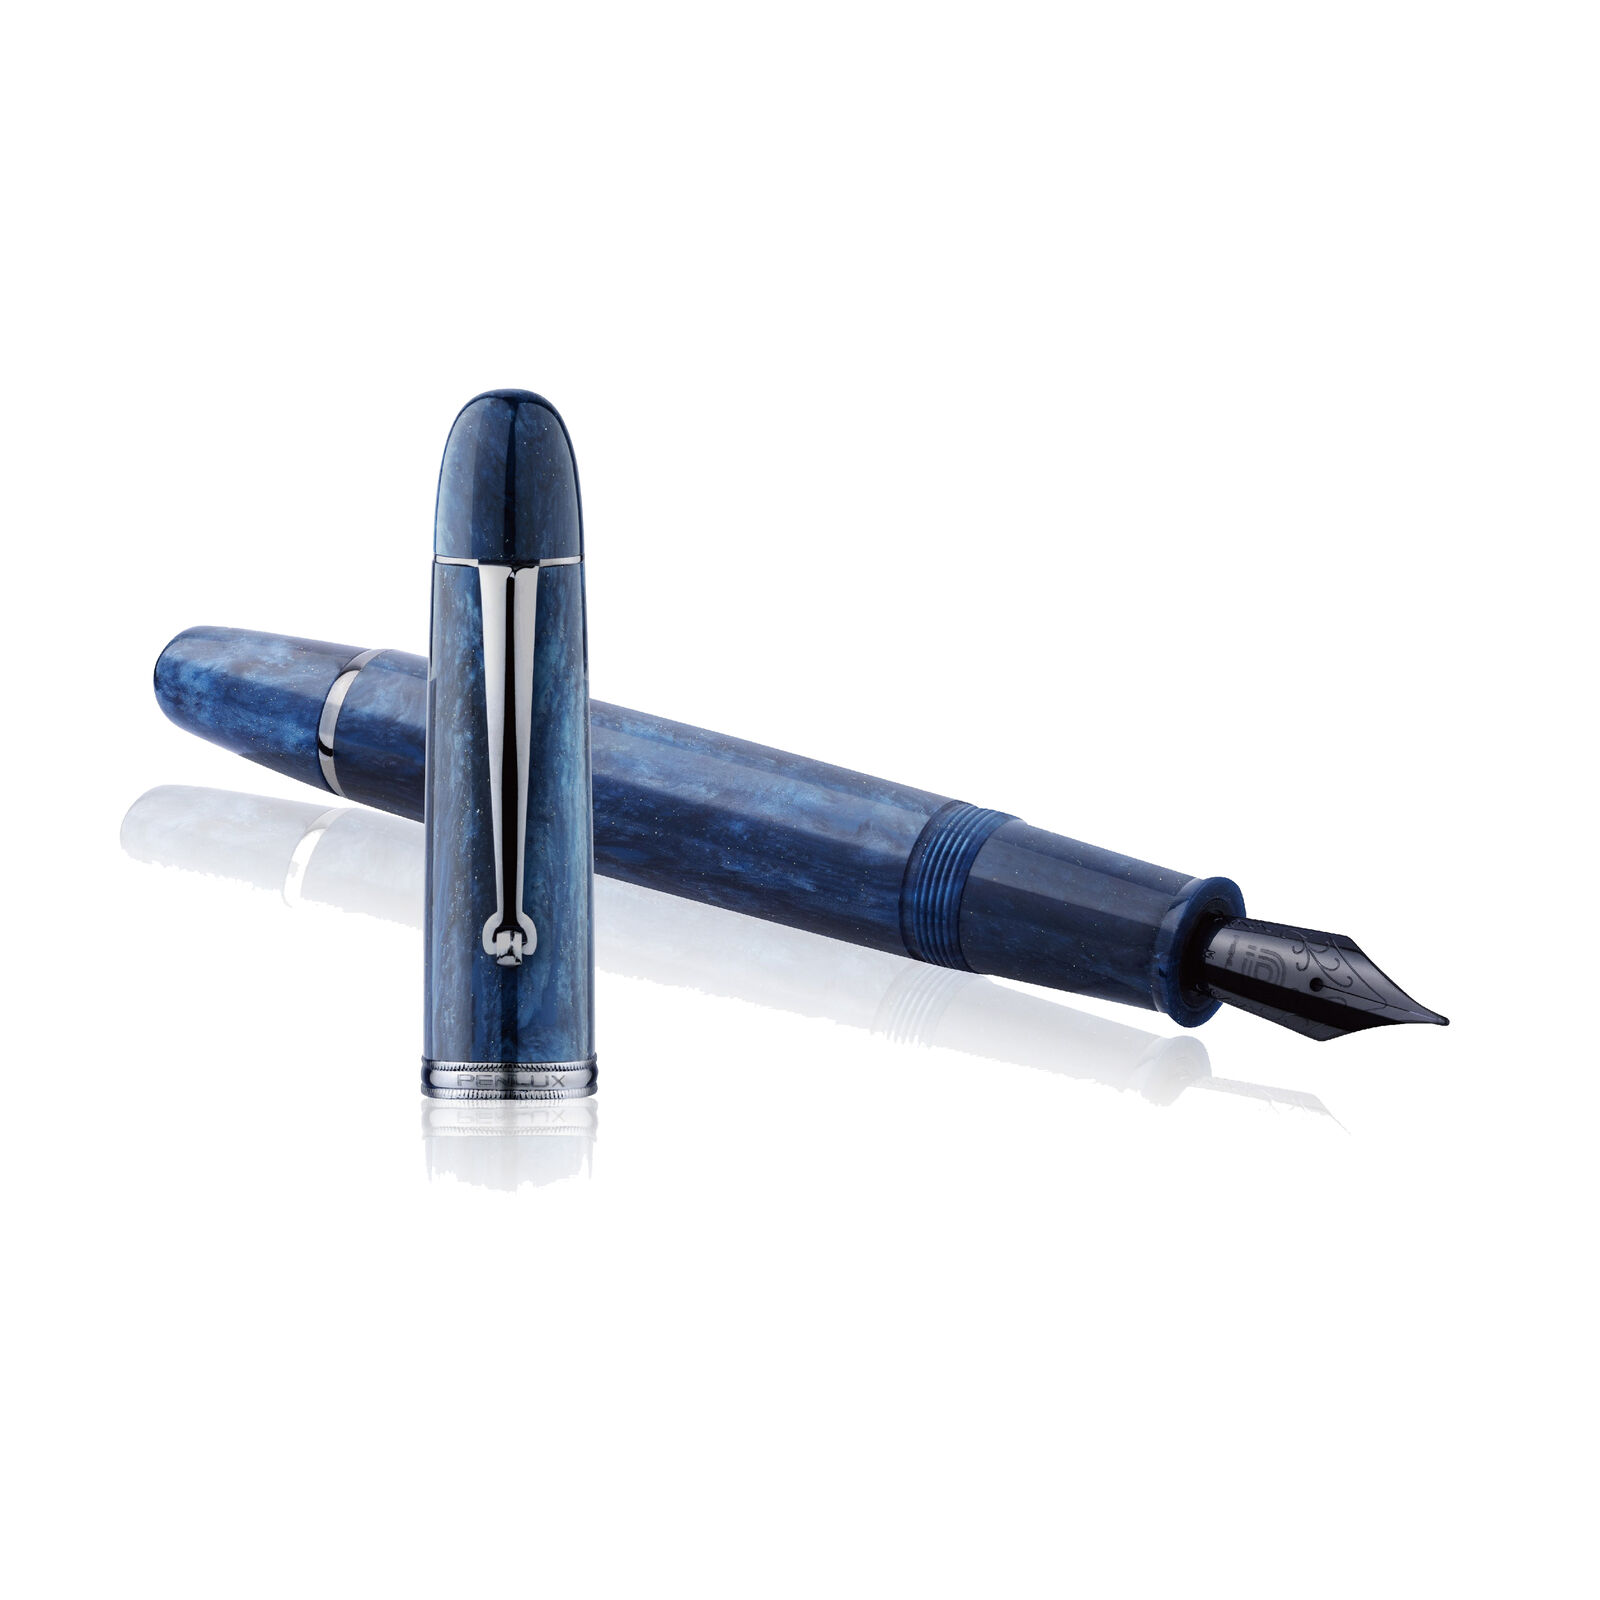 Penlux Masterpiece Grande Fountain Pen in Galaxy - Fine Point - NEW in Box